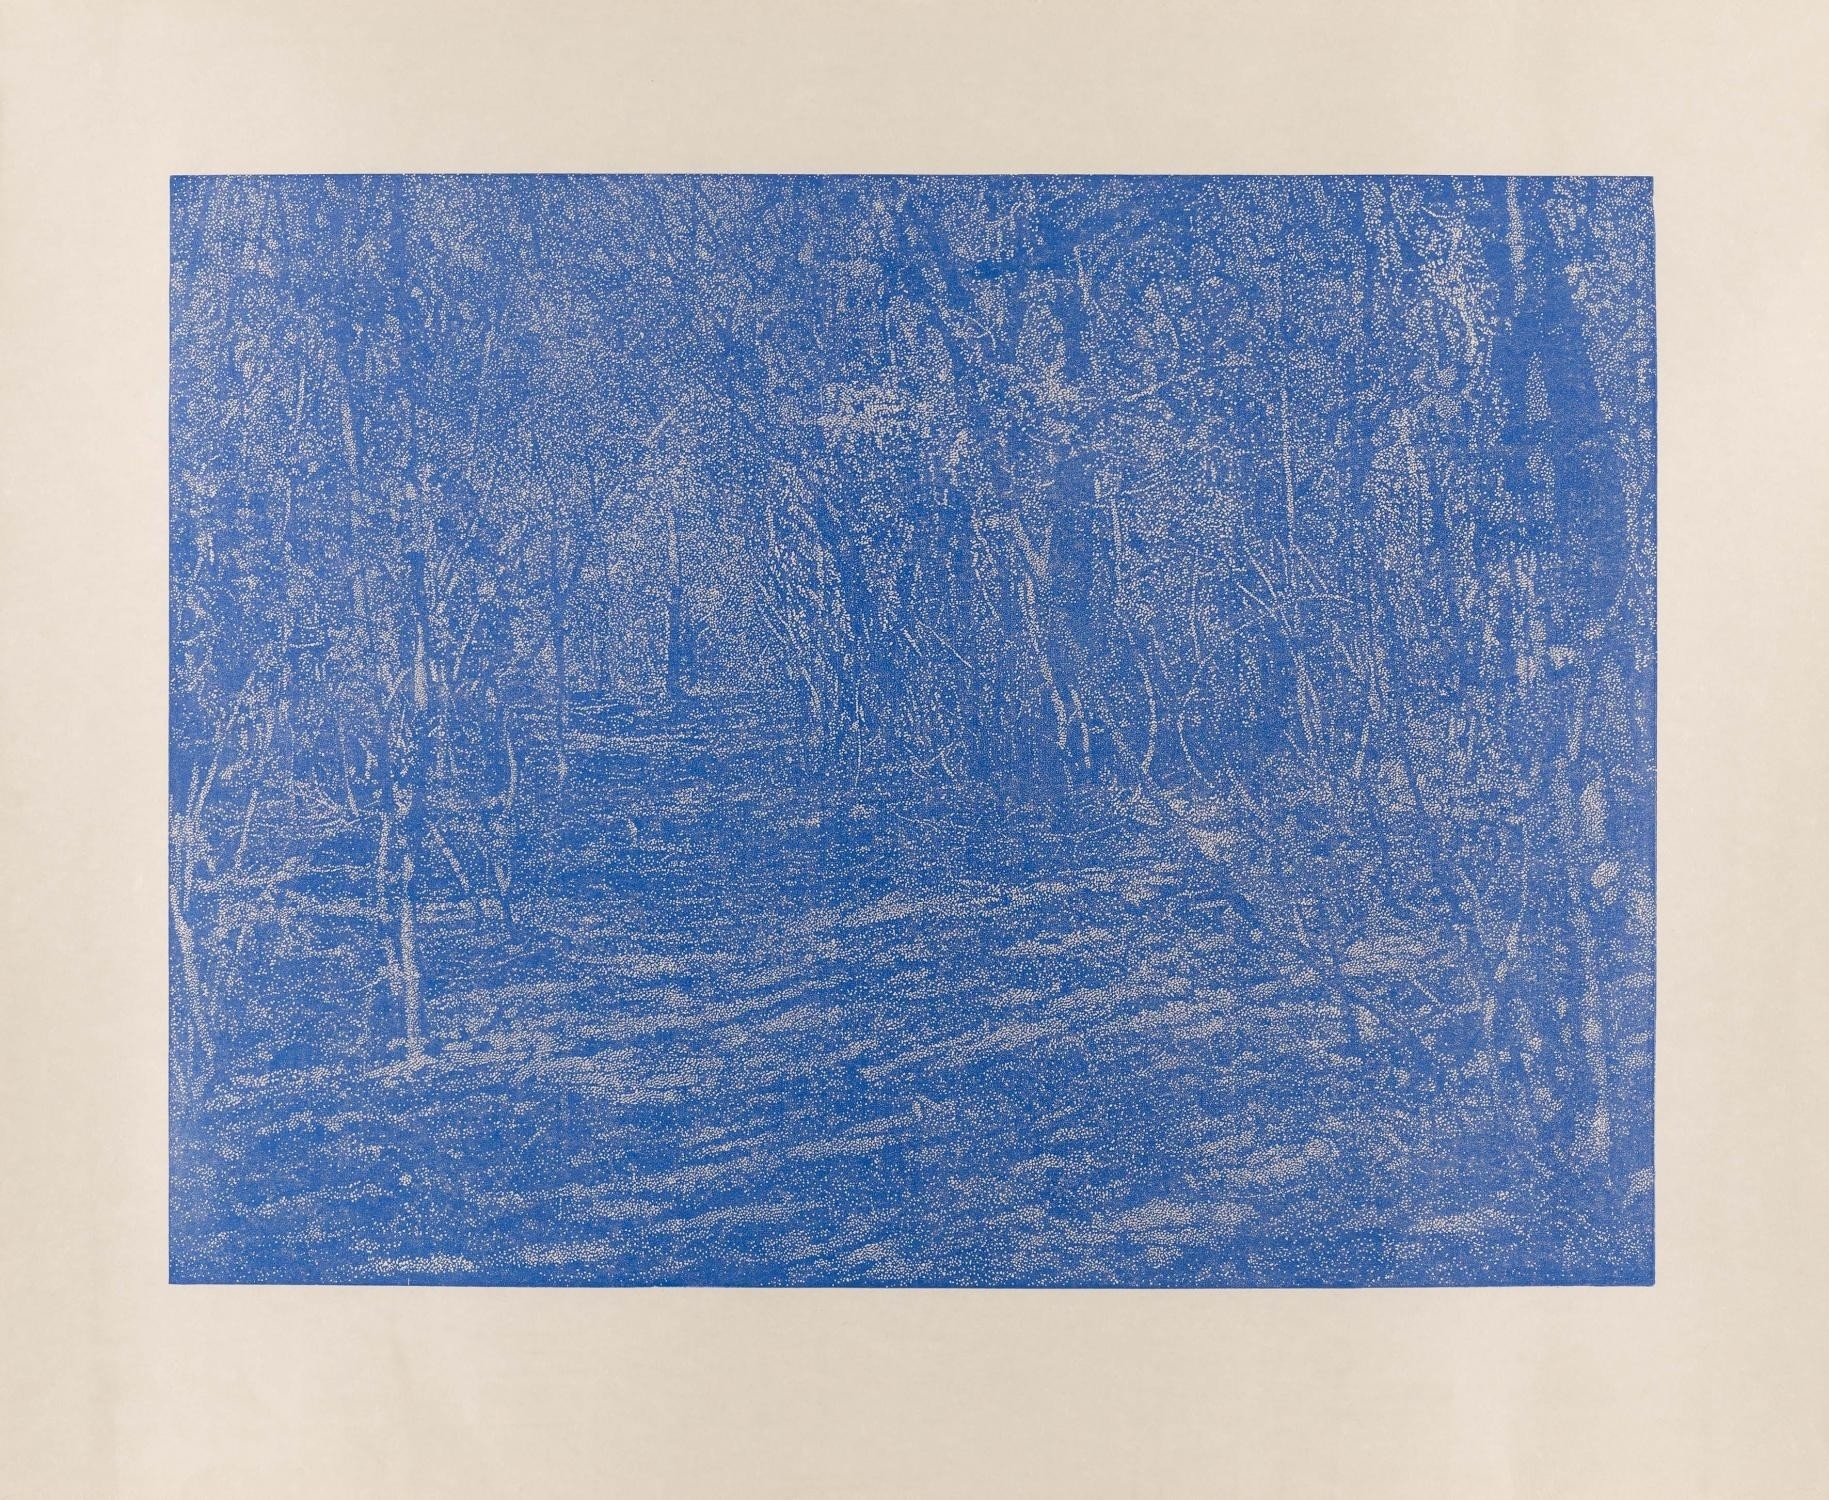 Bagatelle I - Forest Path (Lapis Lazuli Blue) by Franz Gertsch, 2002